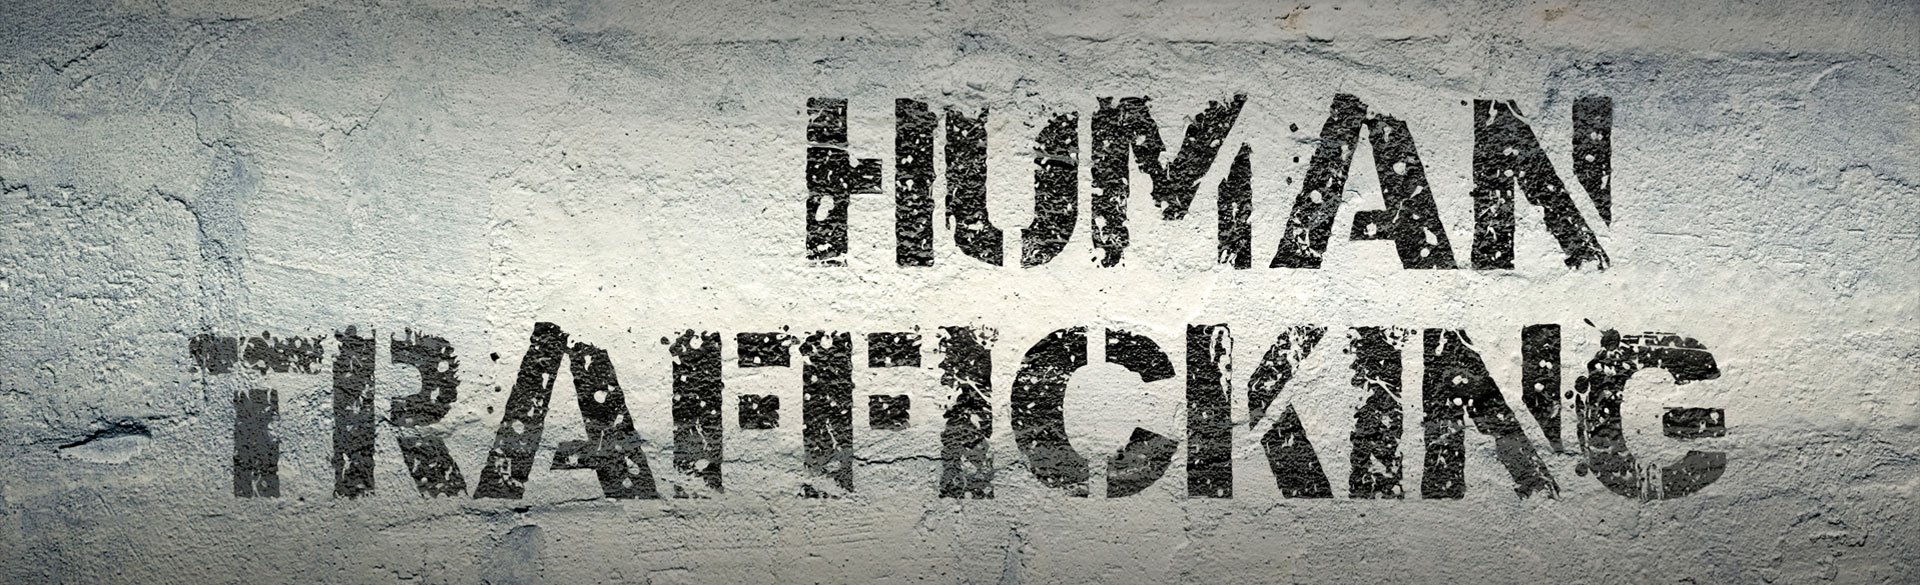 Human Trafficking wording on brick wall